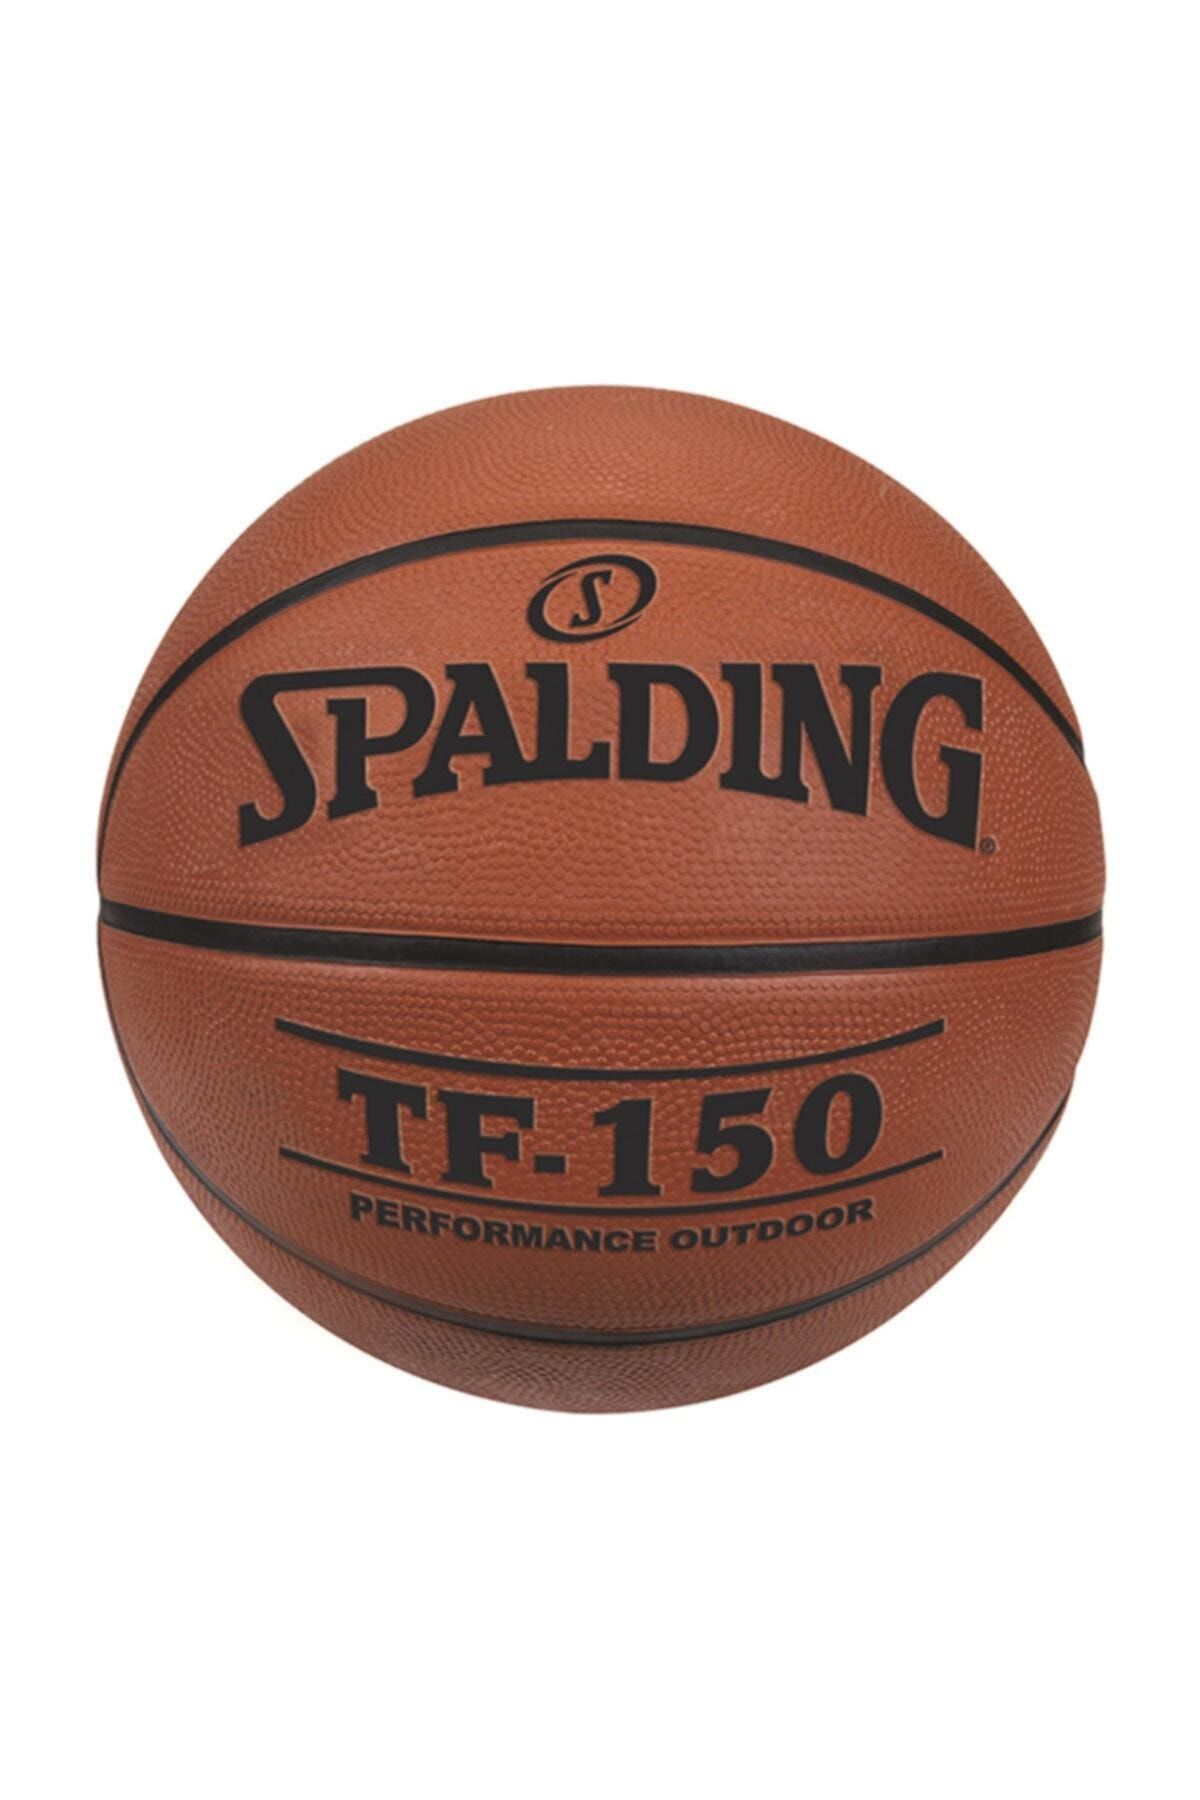 Spalding Tf150 Kauçuk 5 No Basketbol Topu